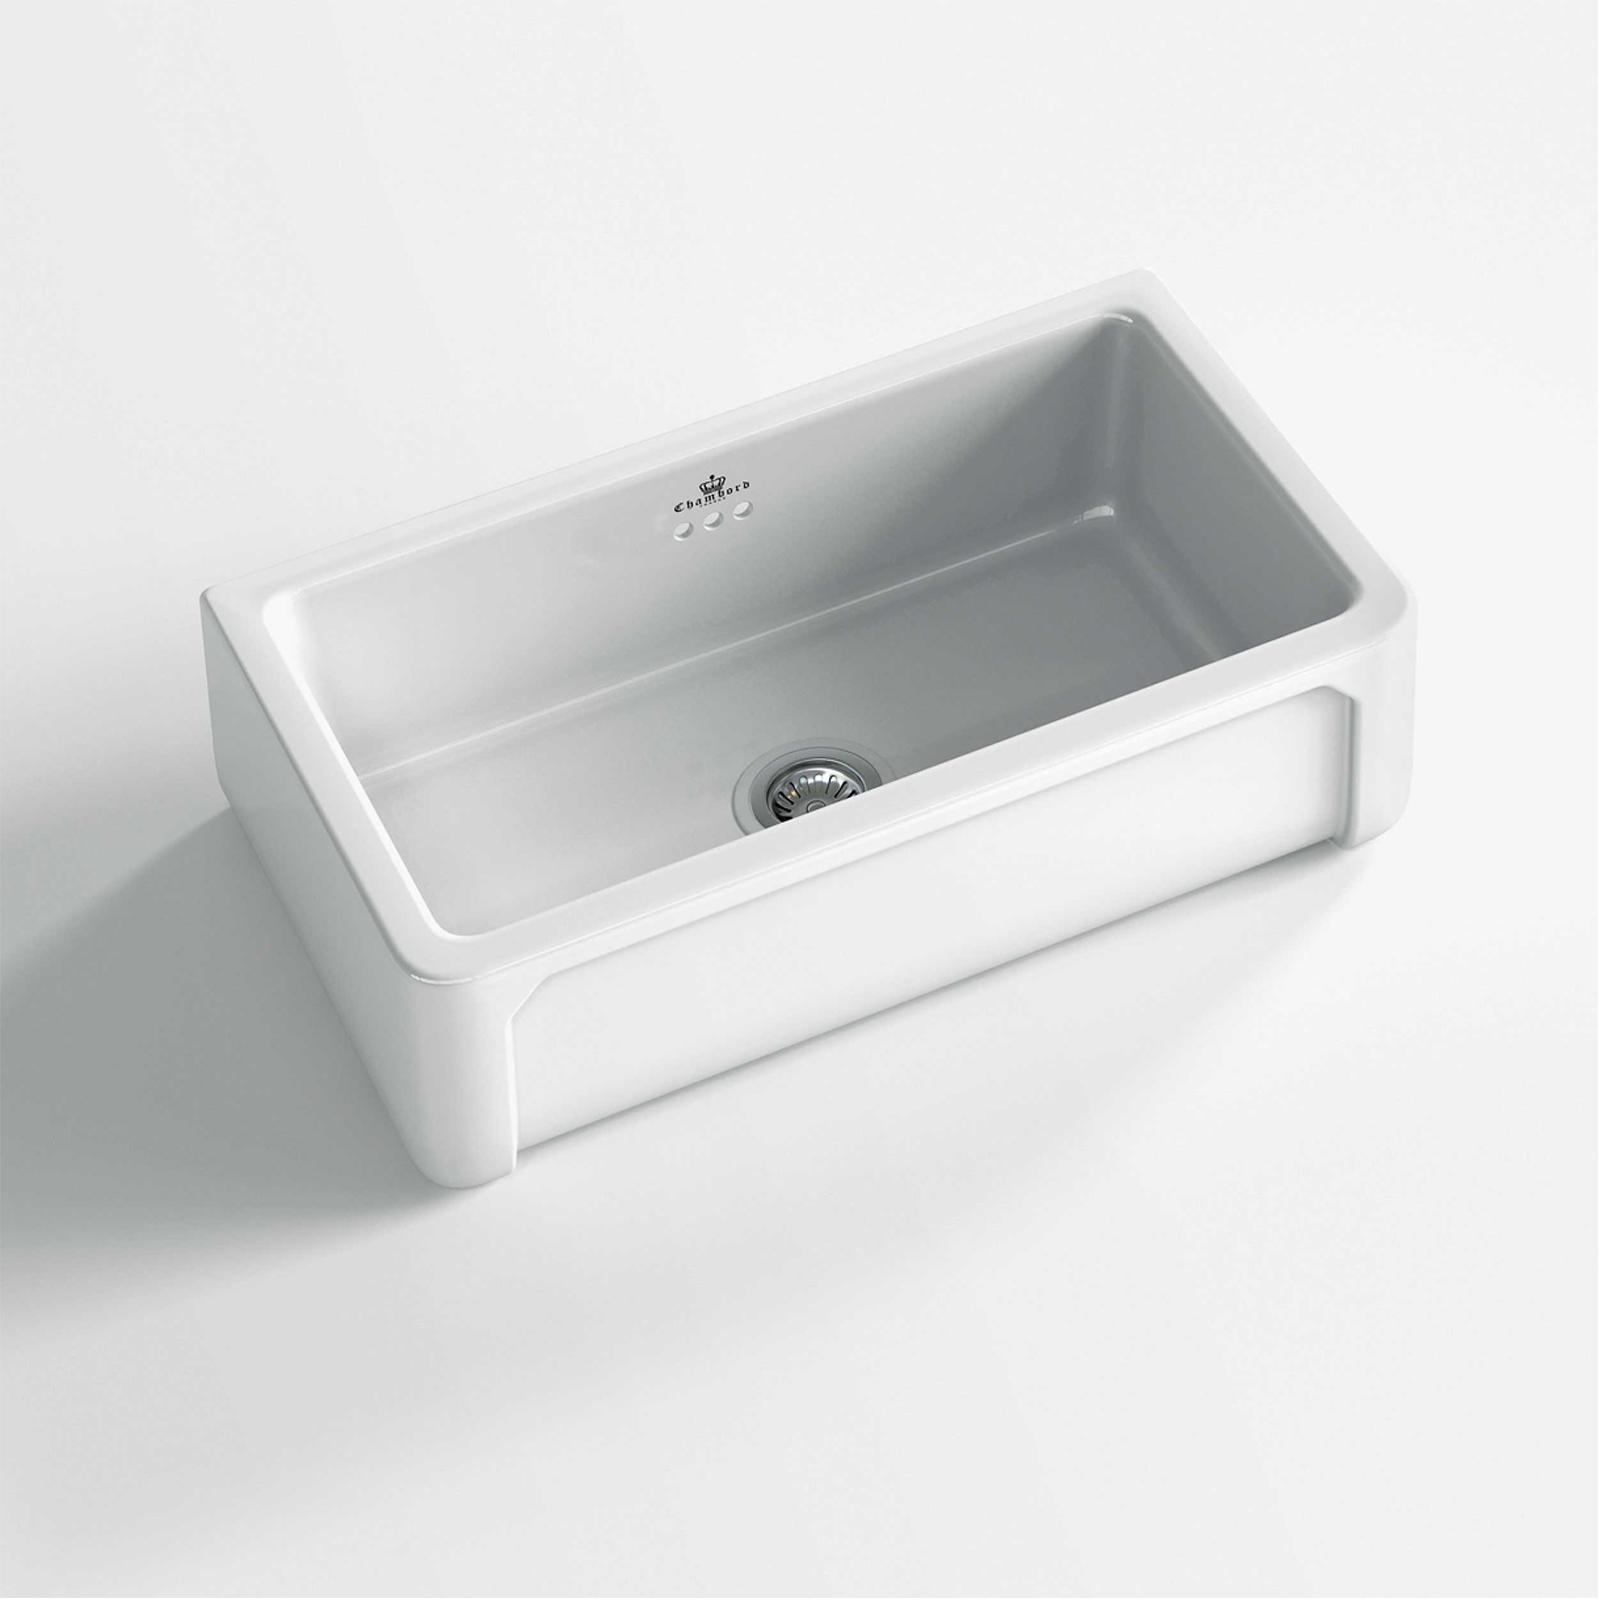 High-quality sink Henri II - single bowl, ceramic